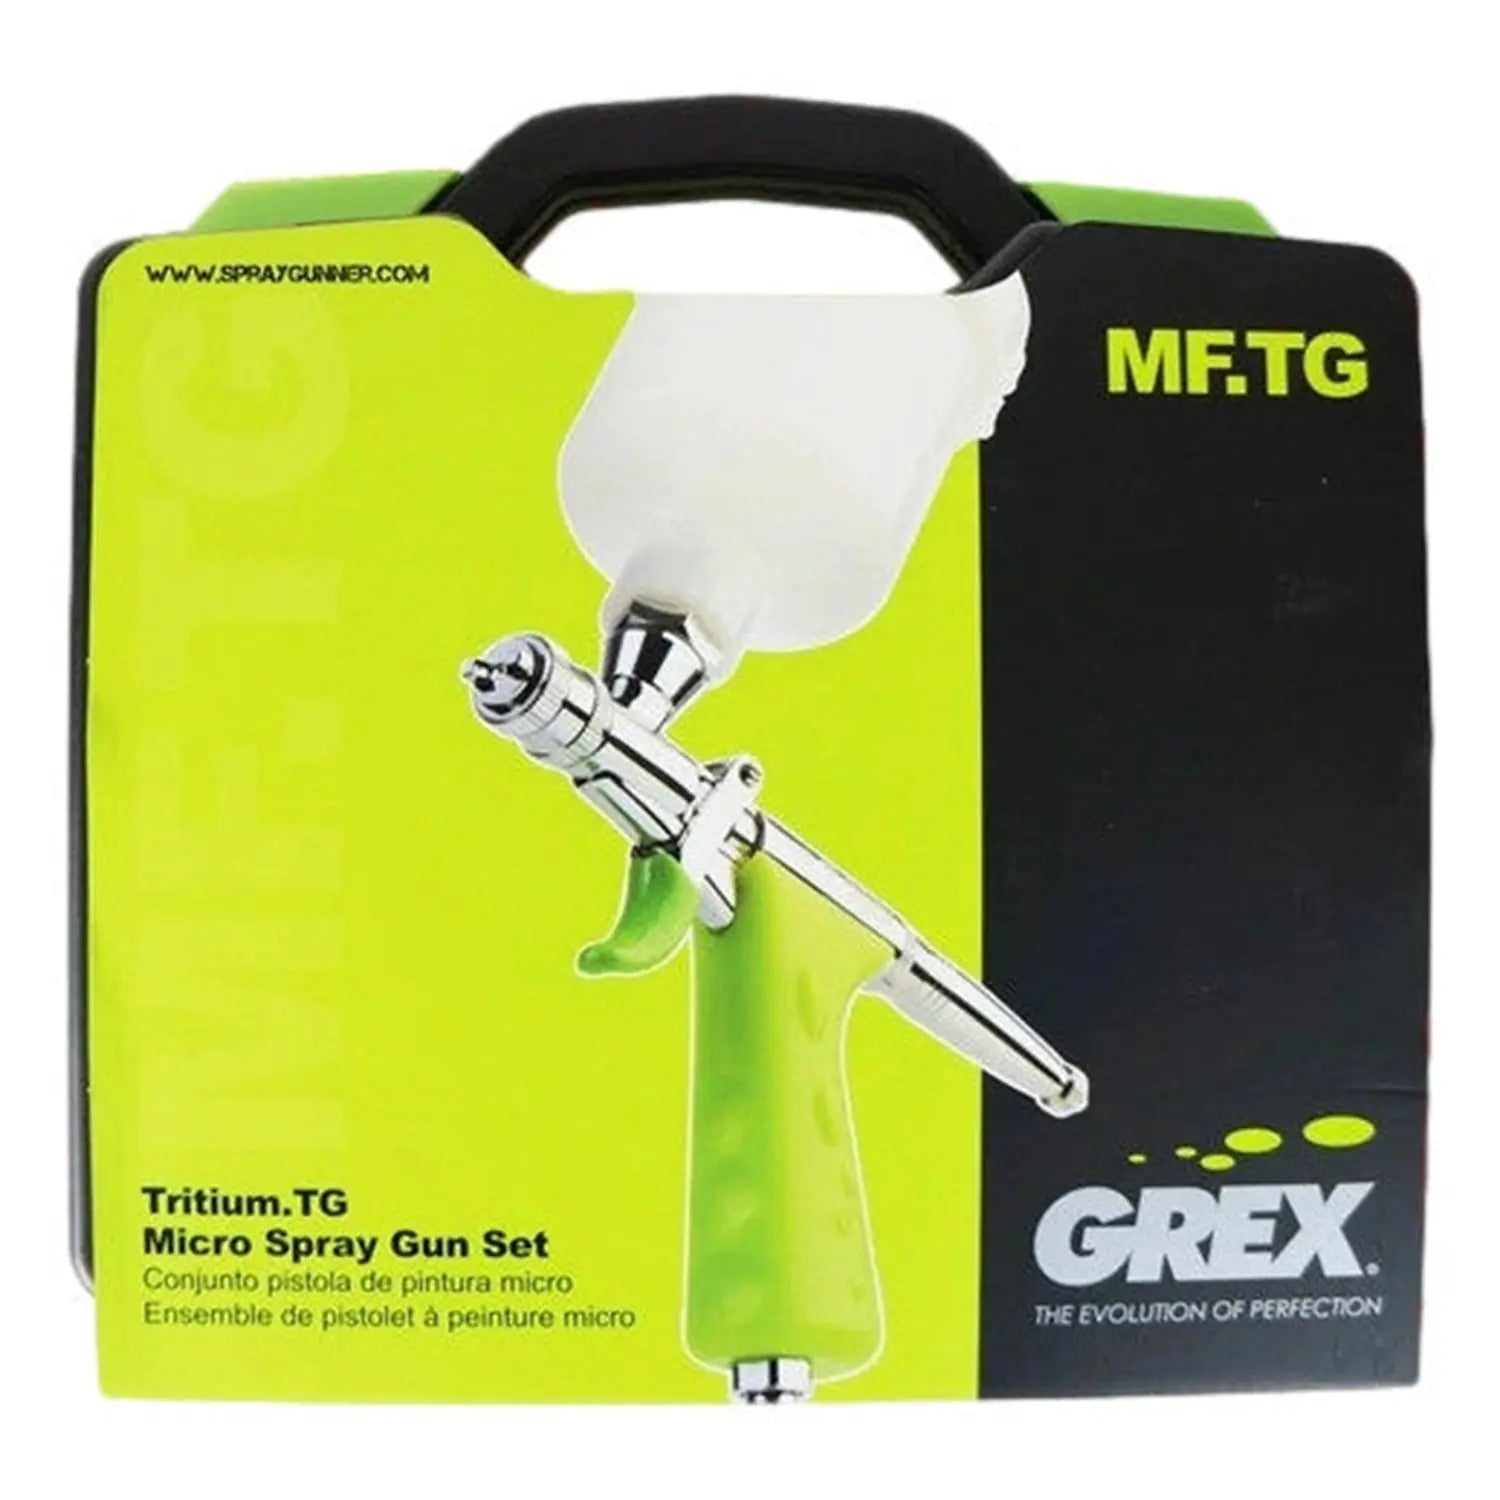 Grex Tritium.TG Micro Spray Gun Set (MF.TG) Grex Airbrush